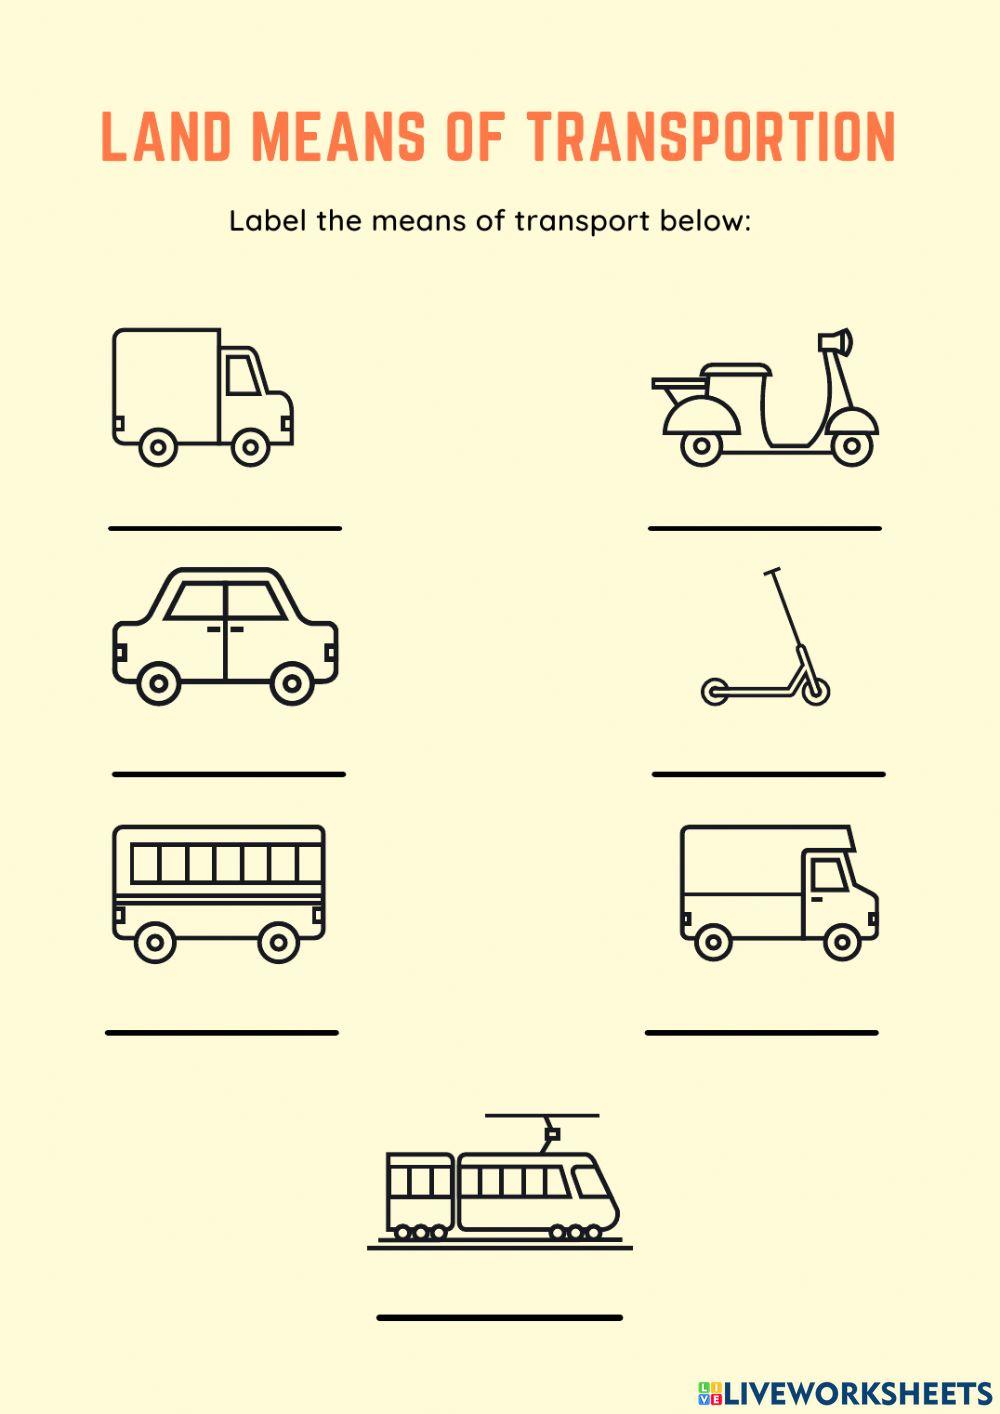 Land means of transportation